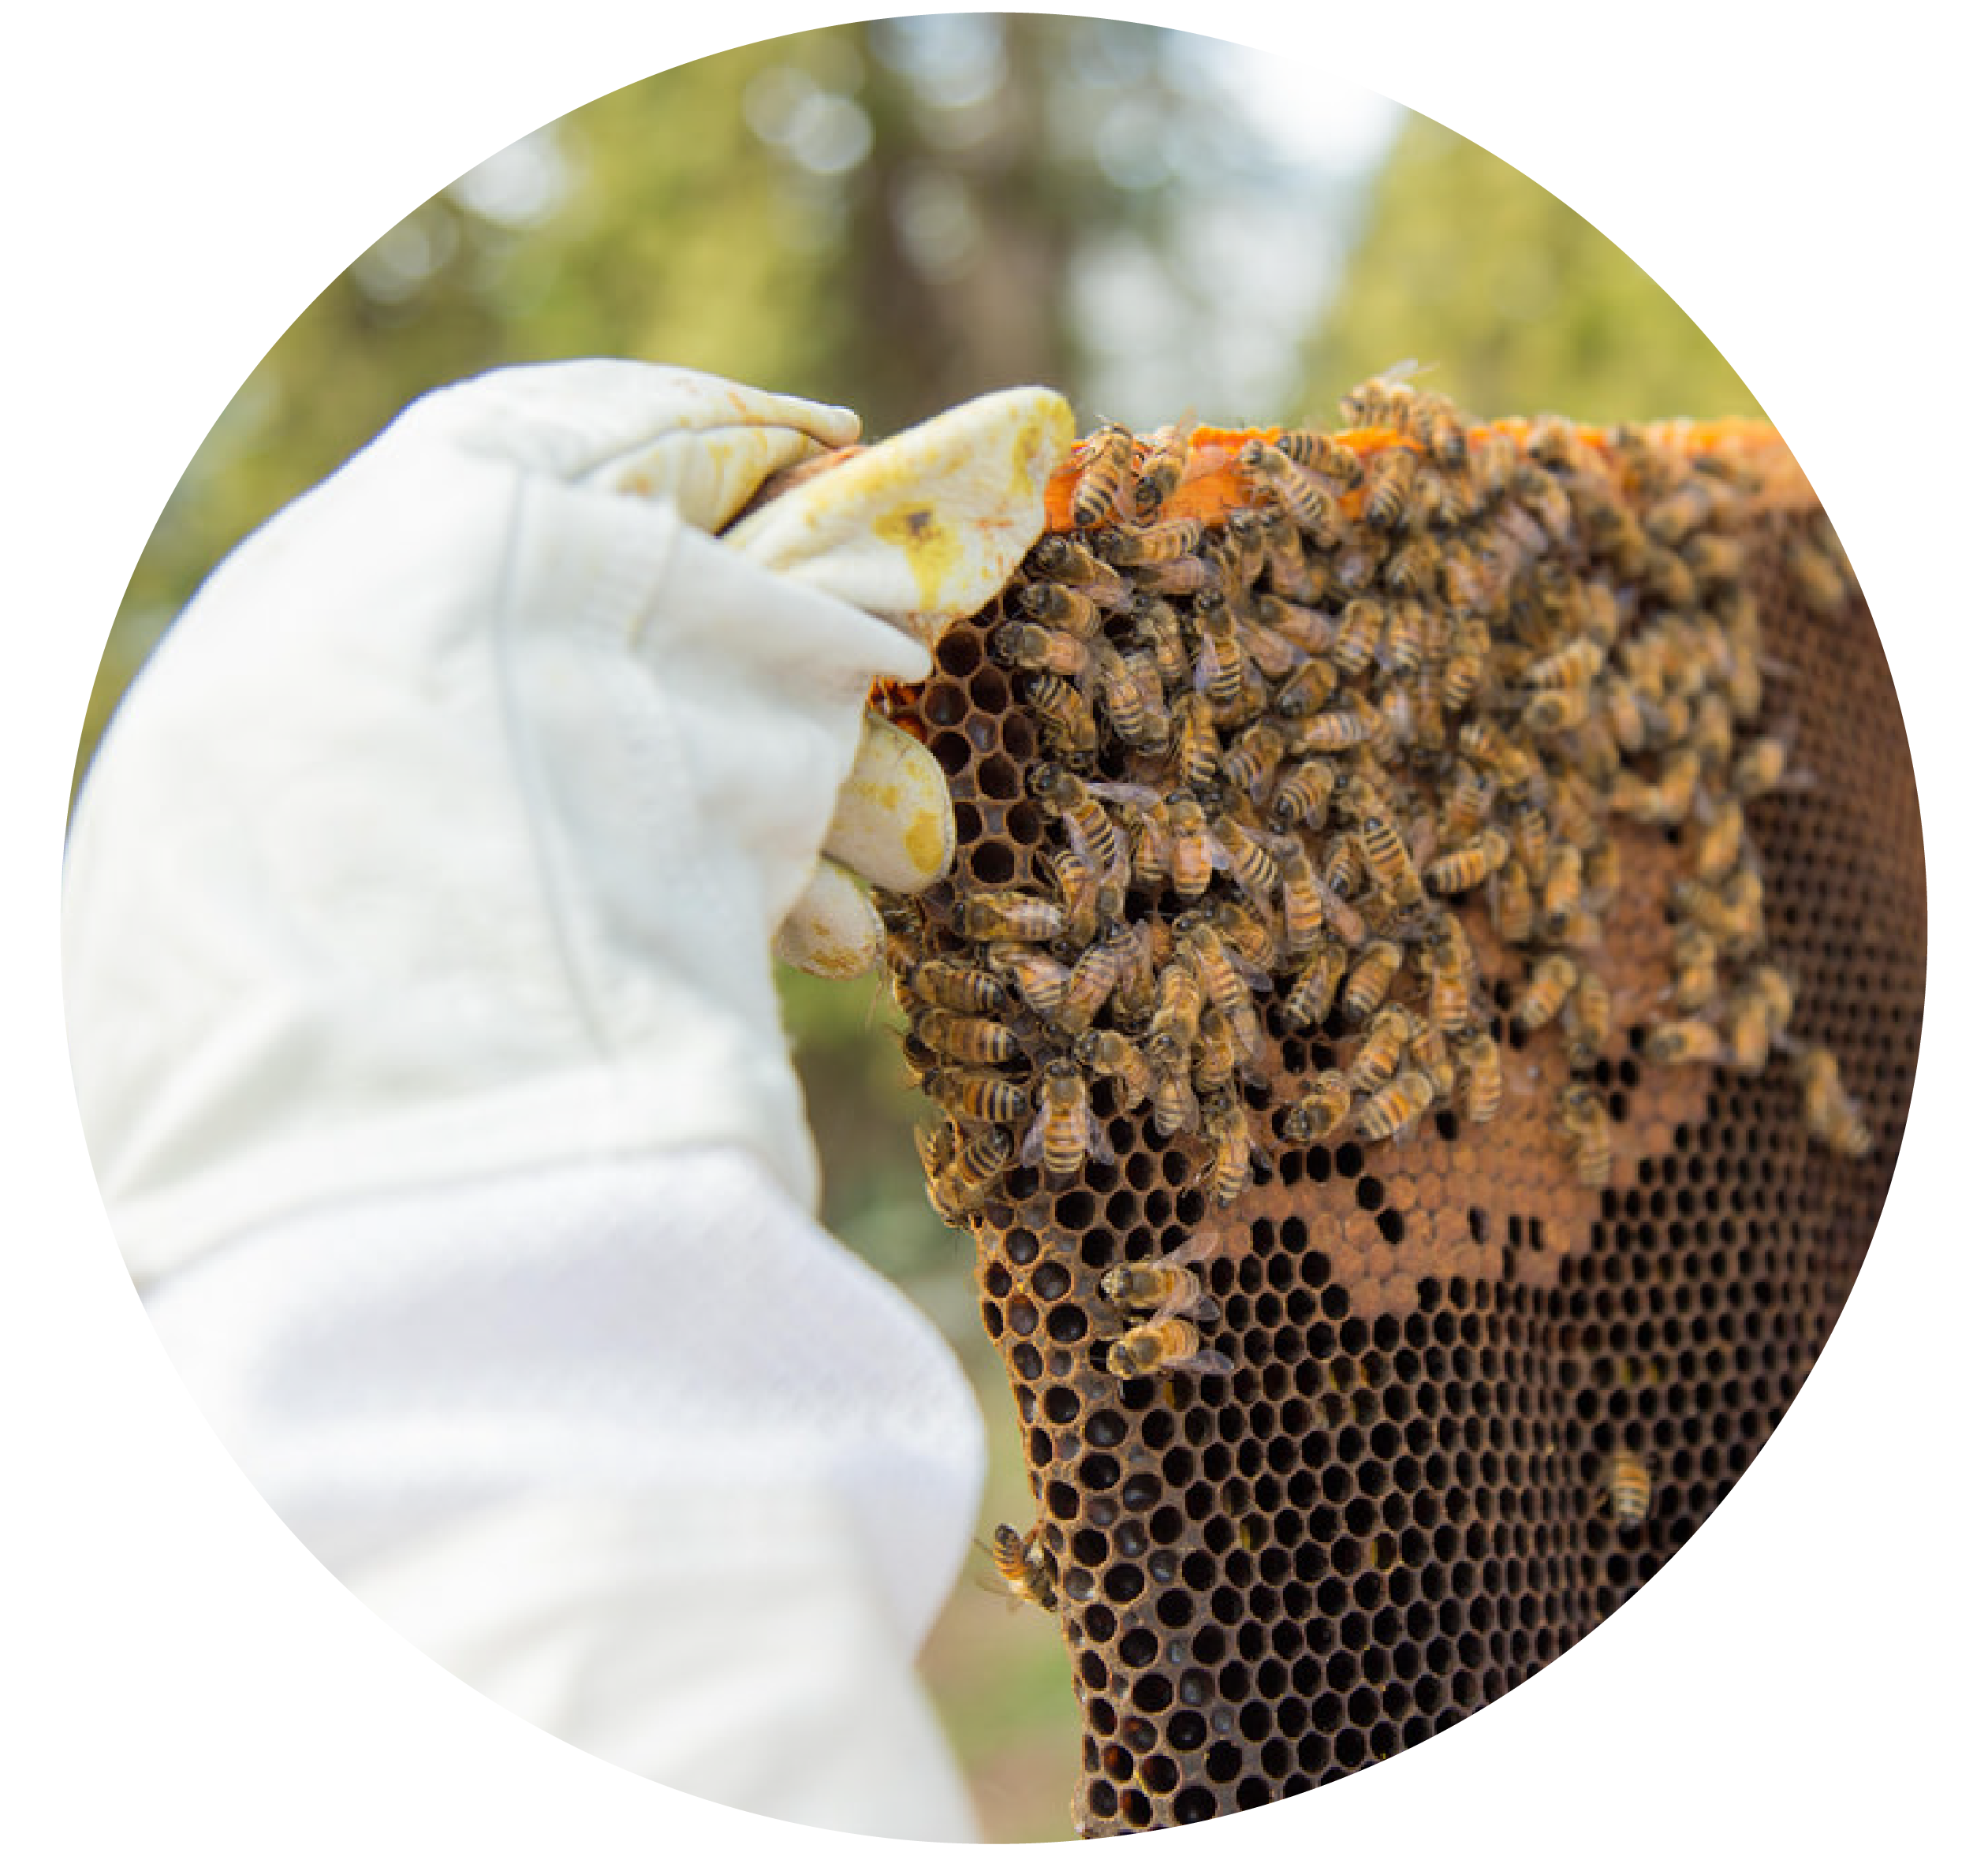 A beekeeper holding up honeybee comb.